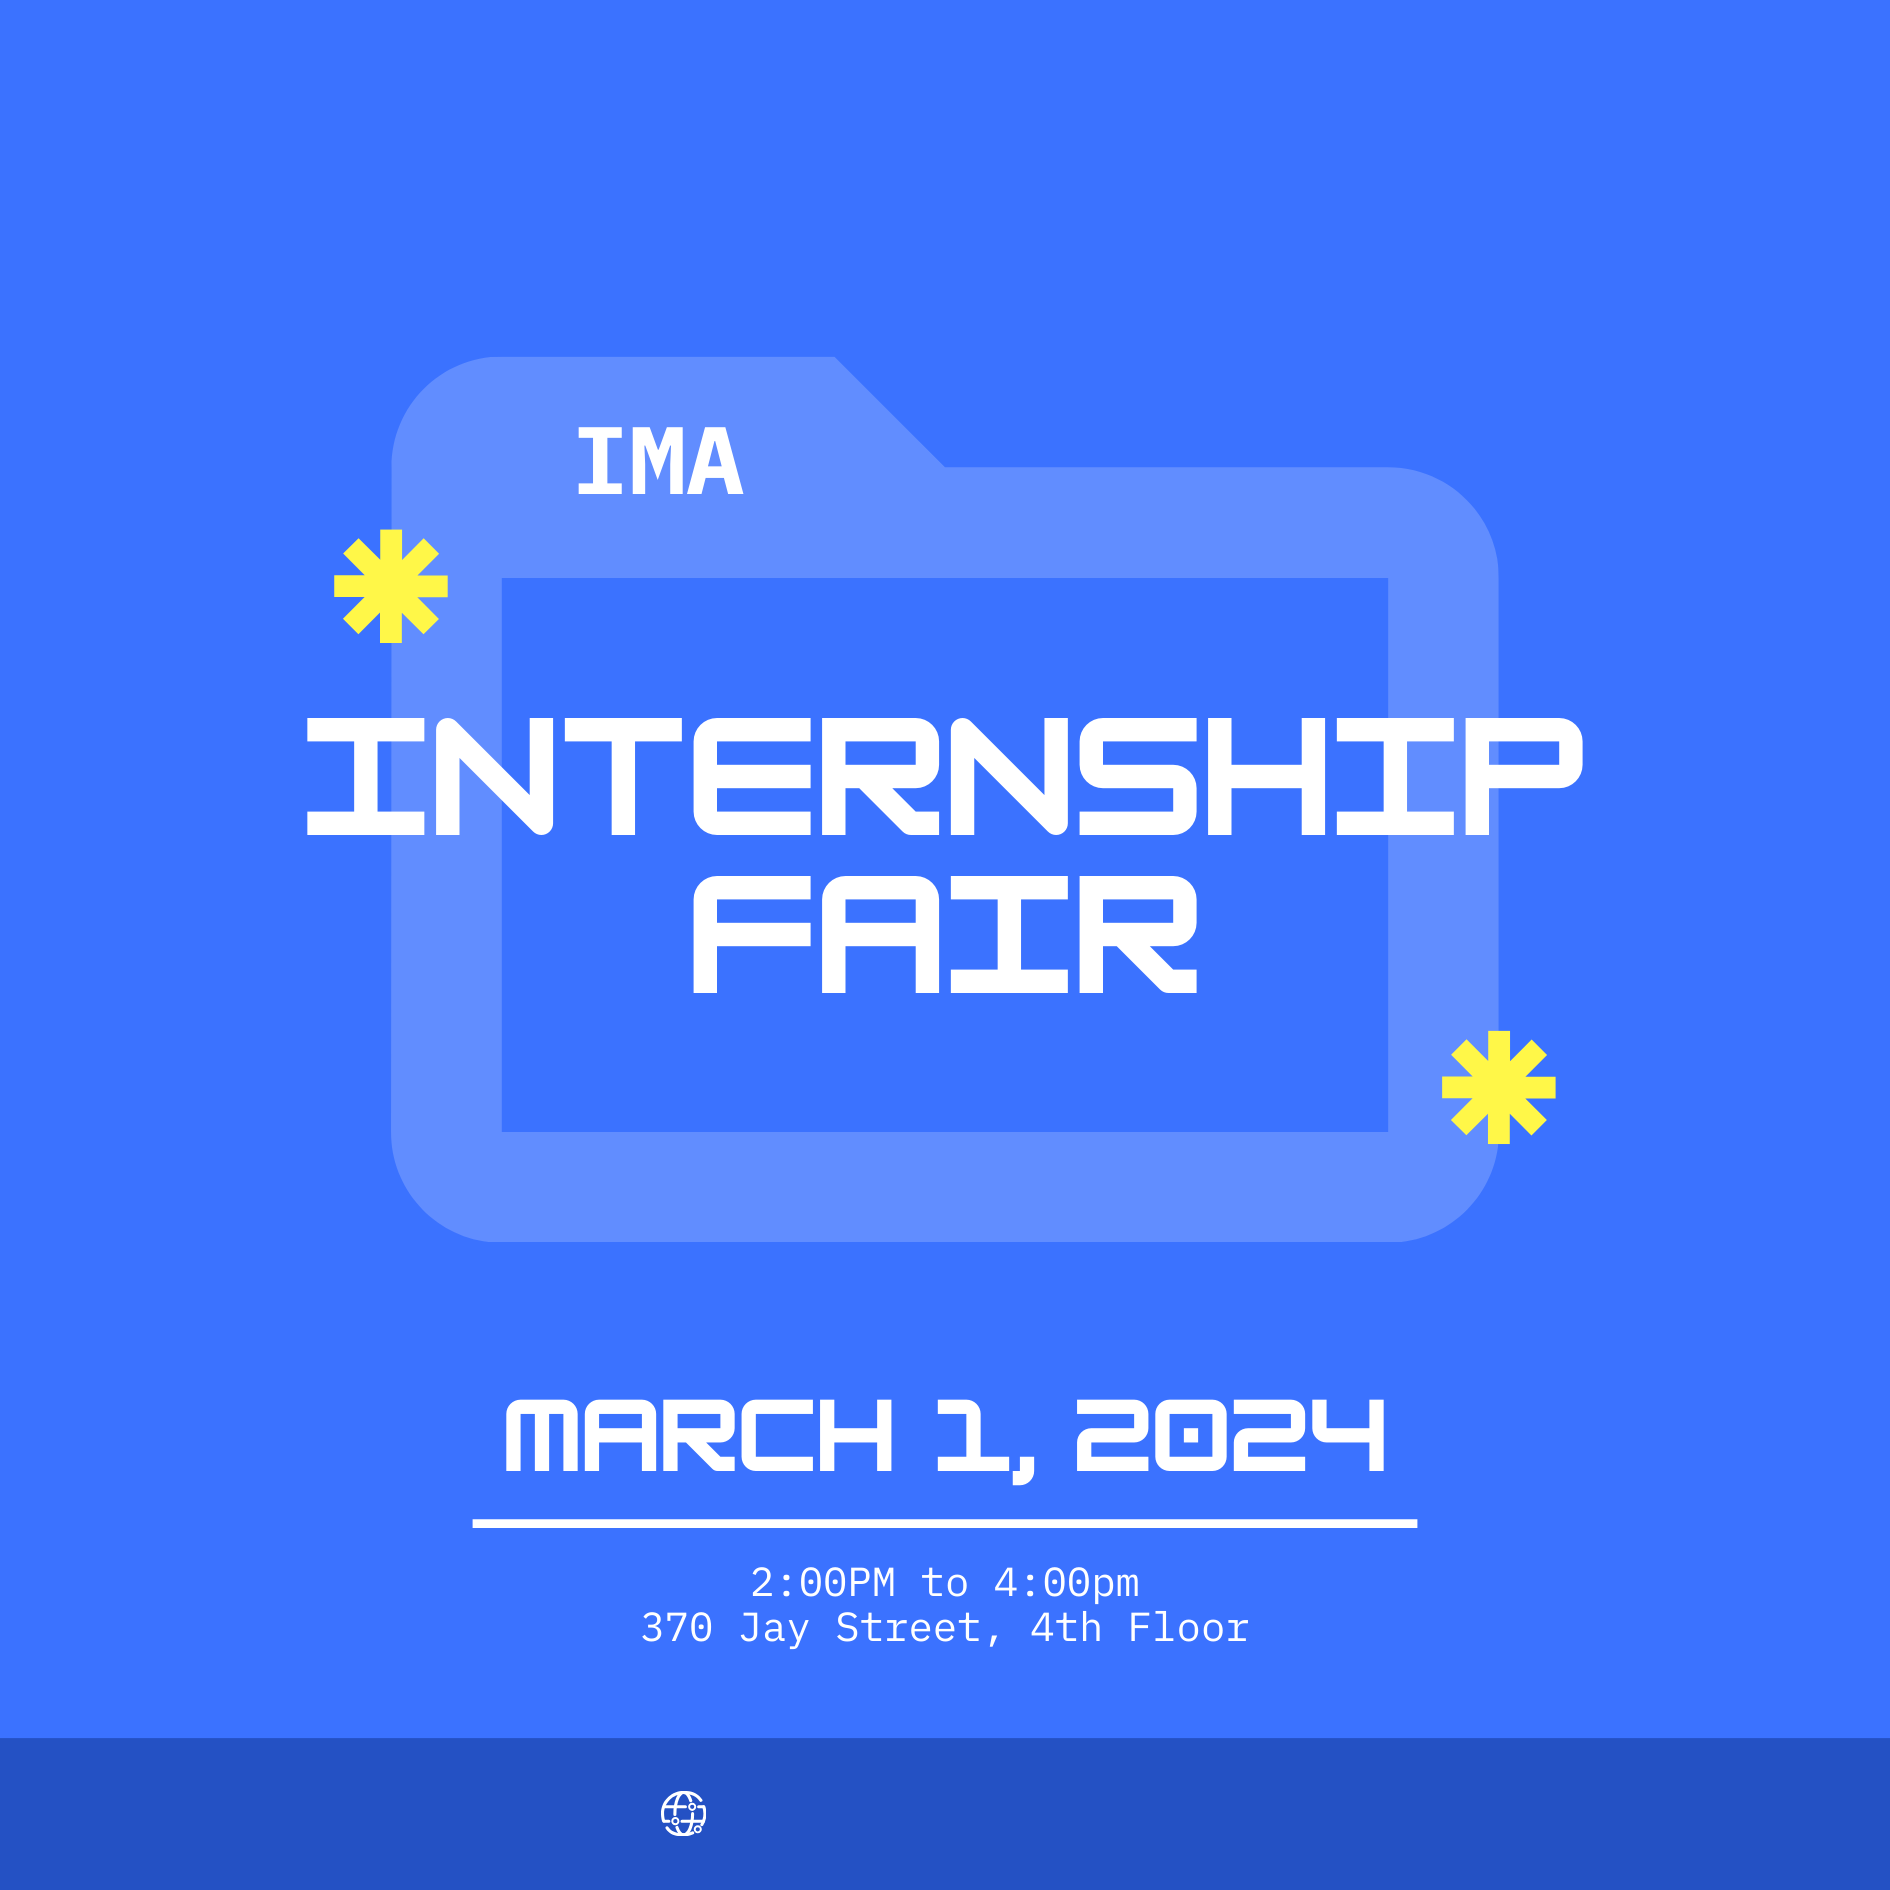 IMA Internship Fair. March 1, 2024. 2:00pm - 4:00pm. 370 Jay Street, Room 4th Floor.